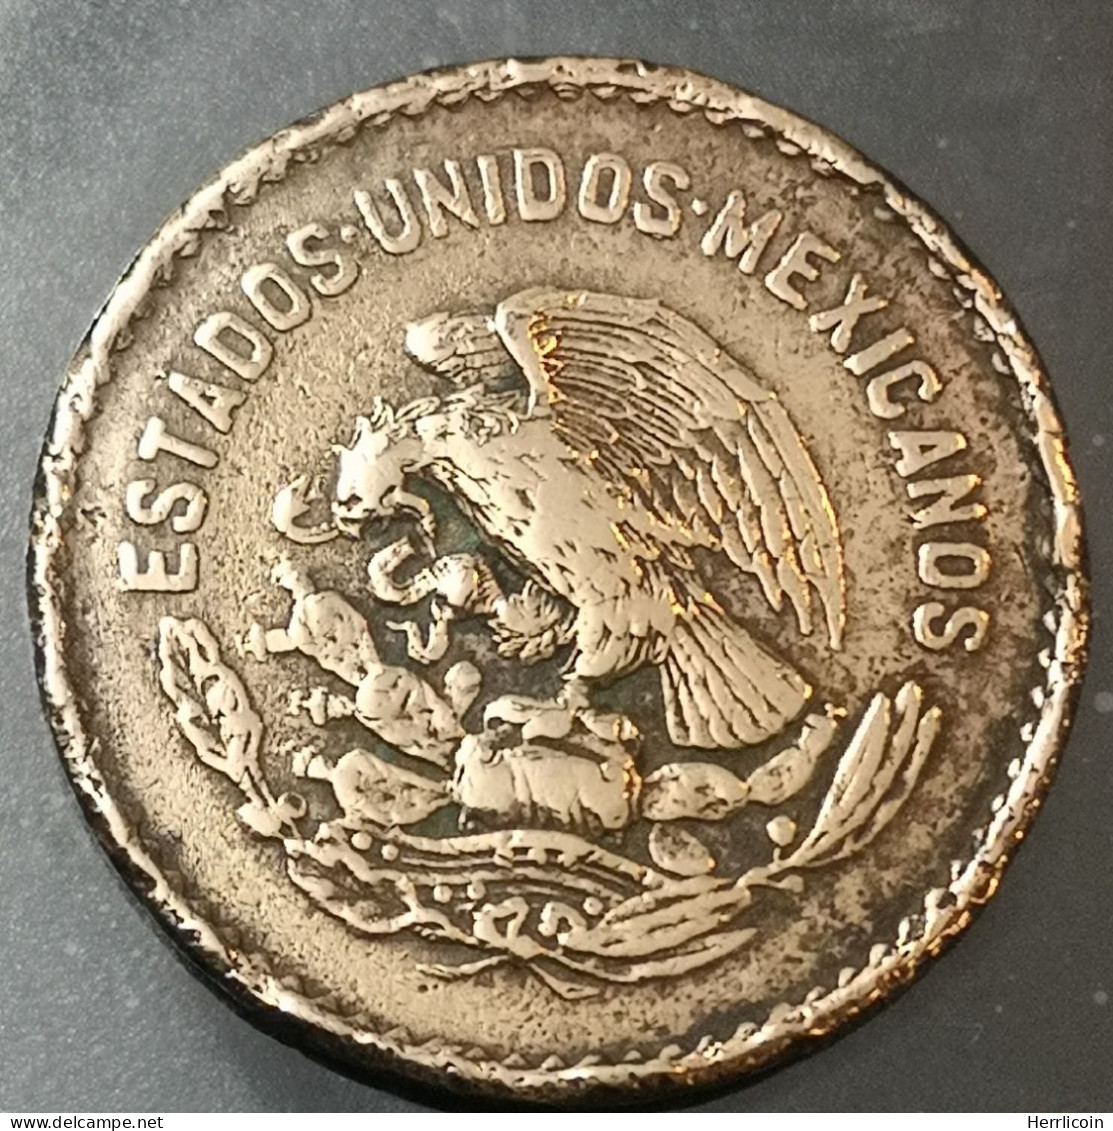 Monnaie Mexique - 1951 - 5 Centavos - Messico